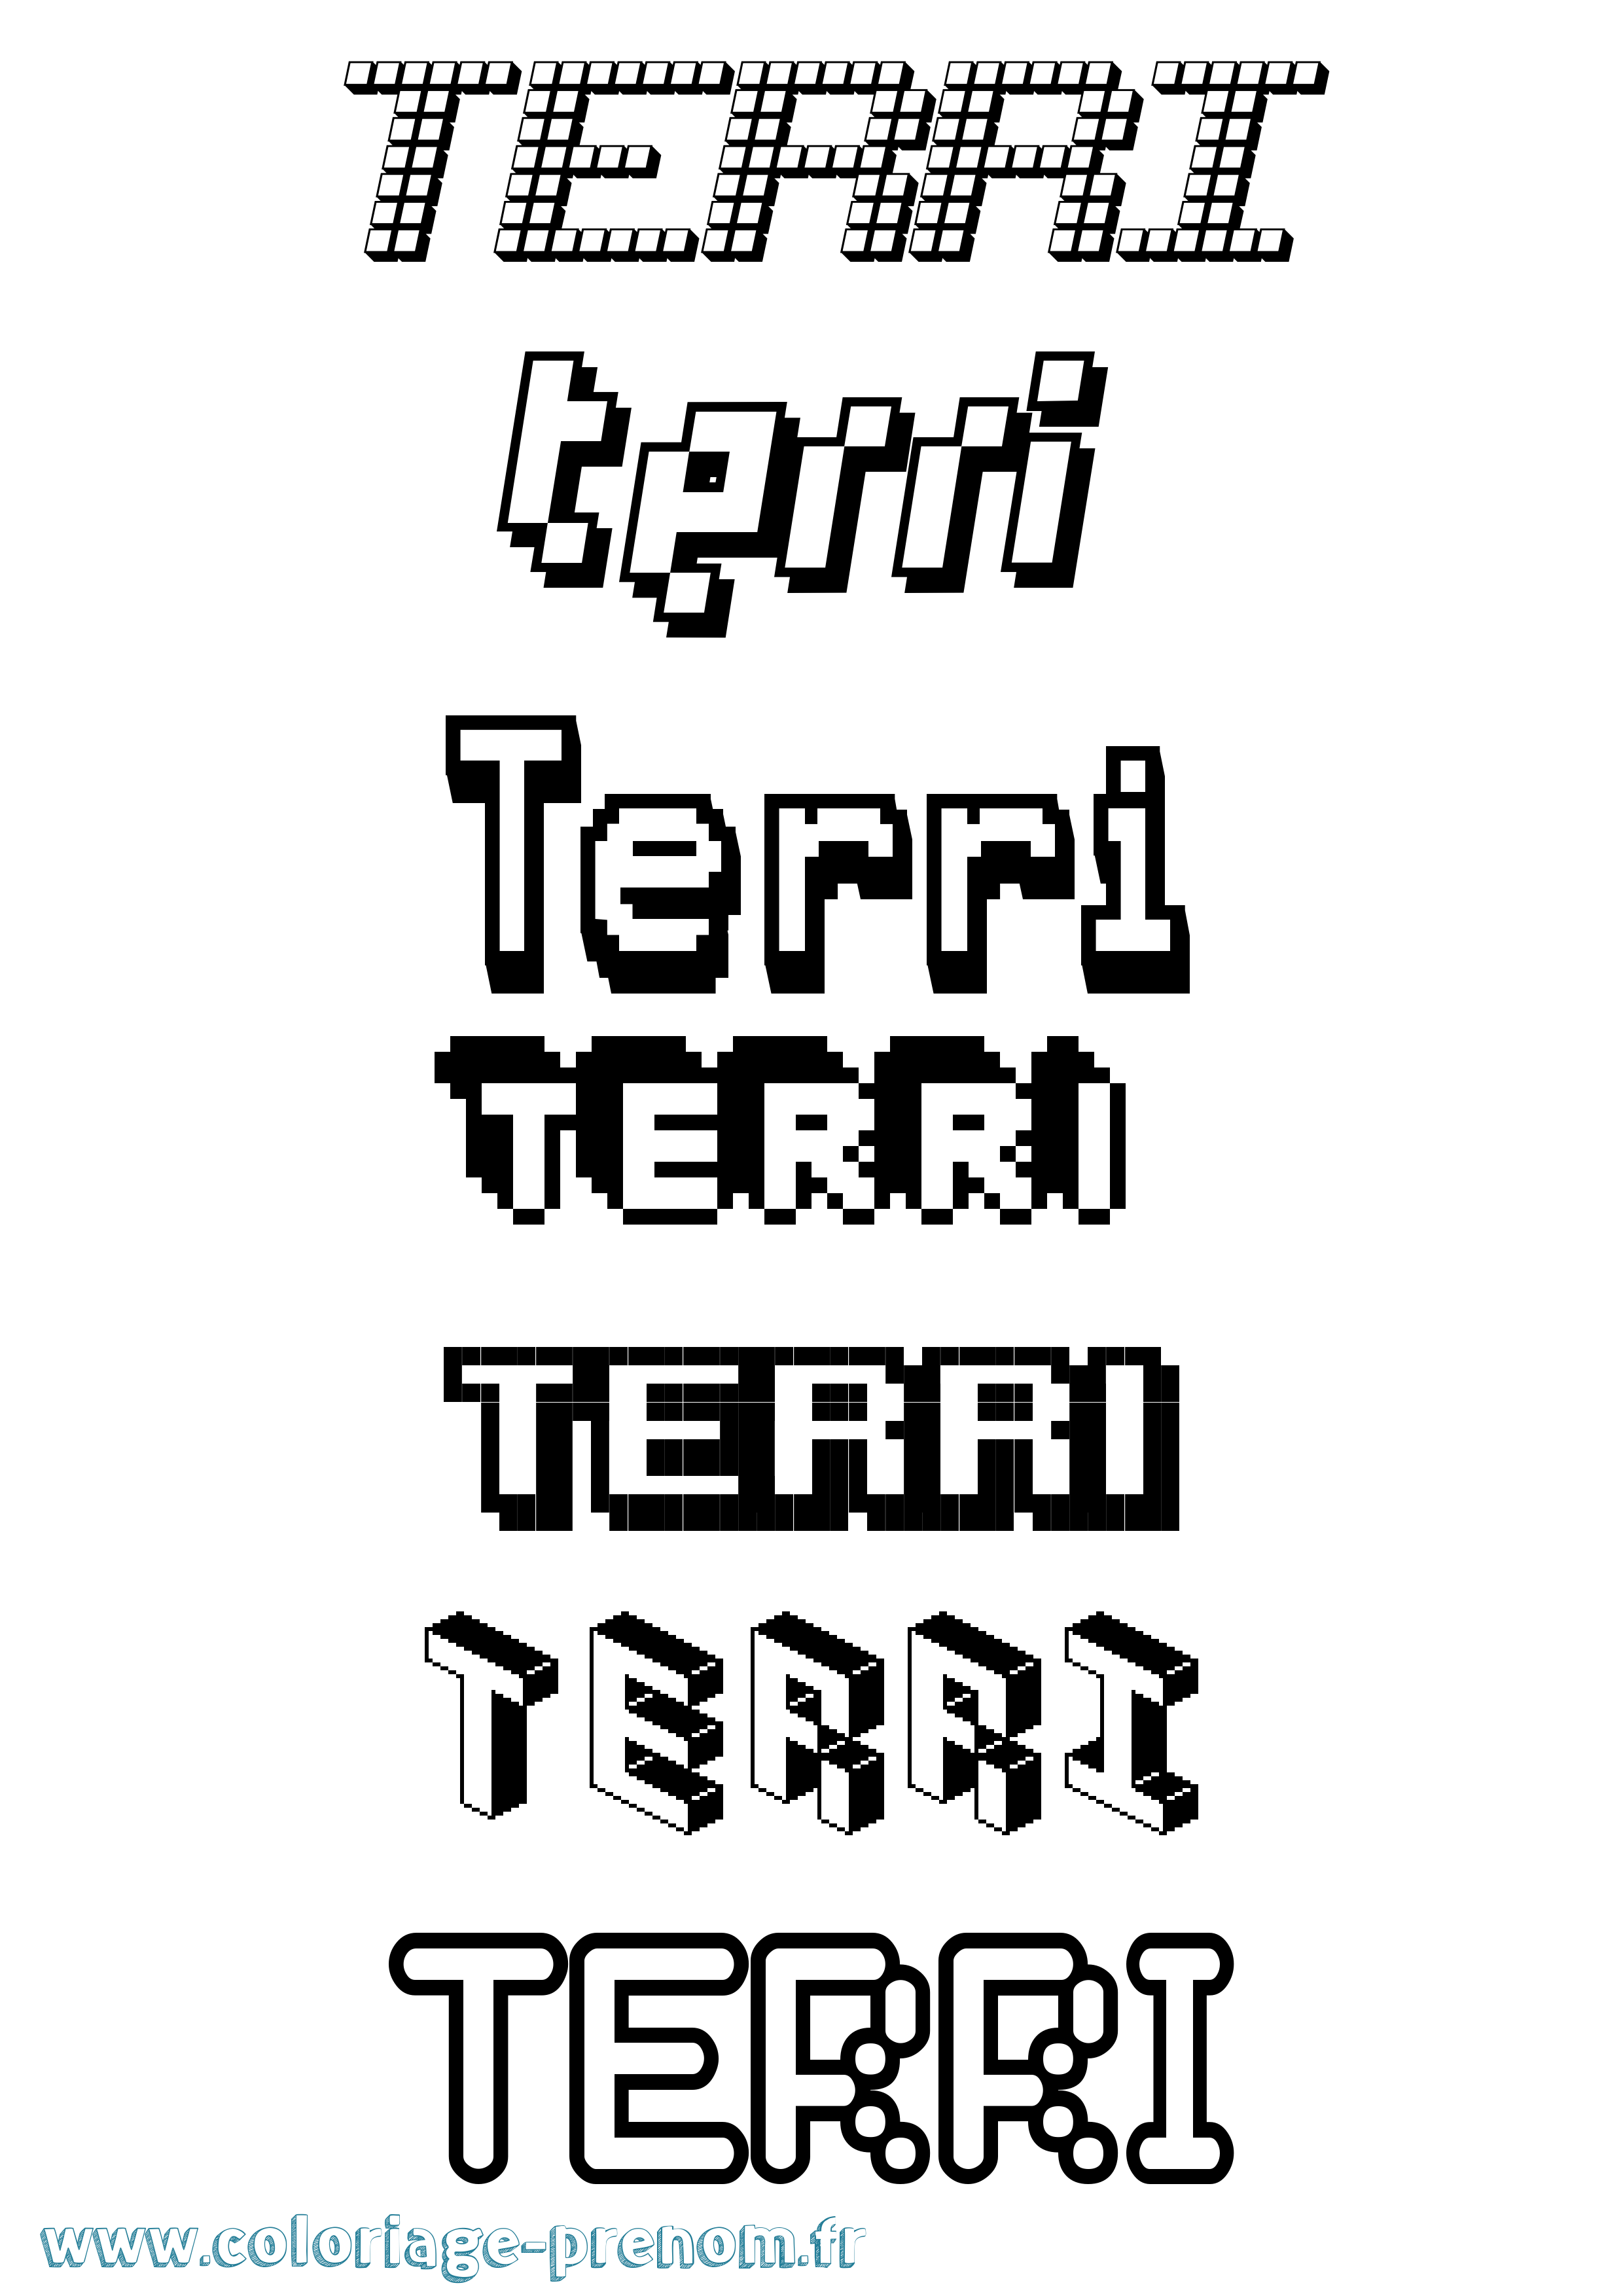 Coloriage prénom Terri Pixel